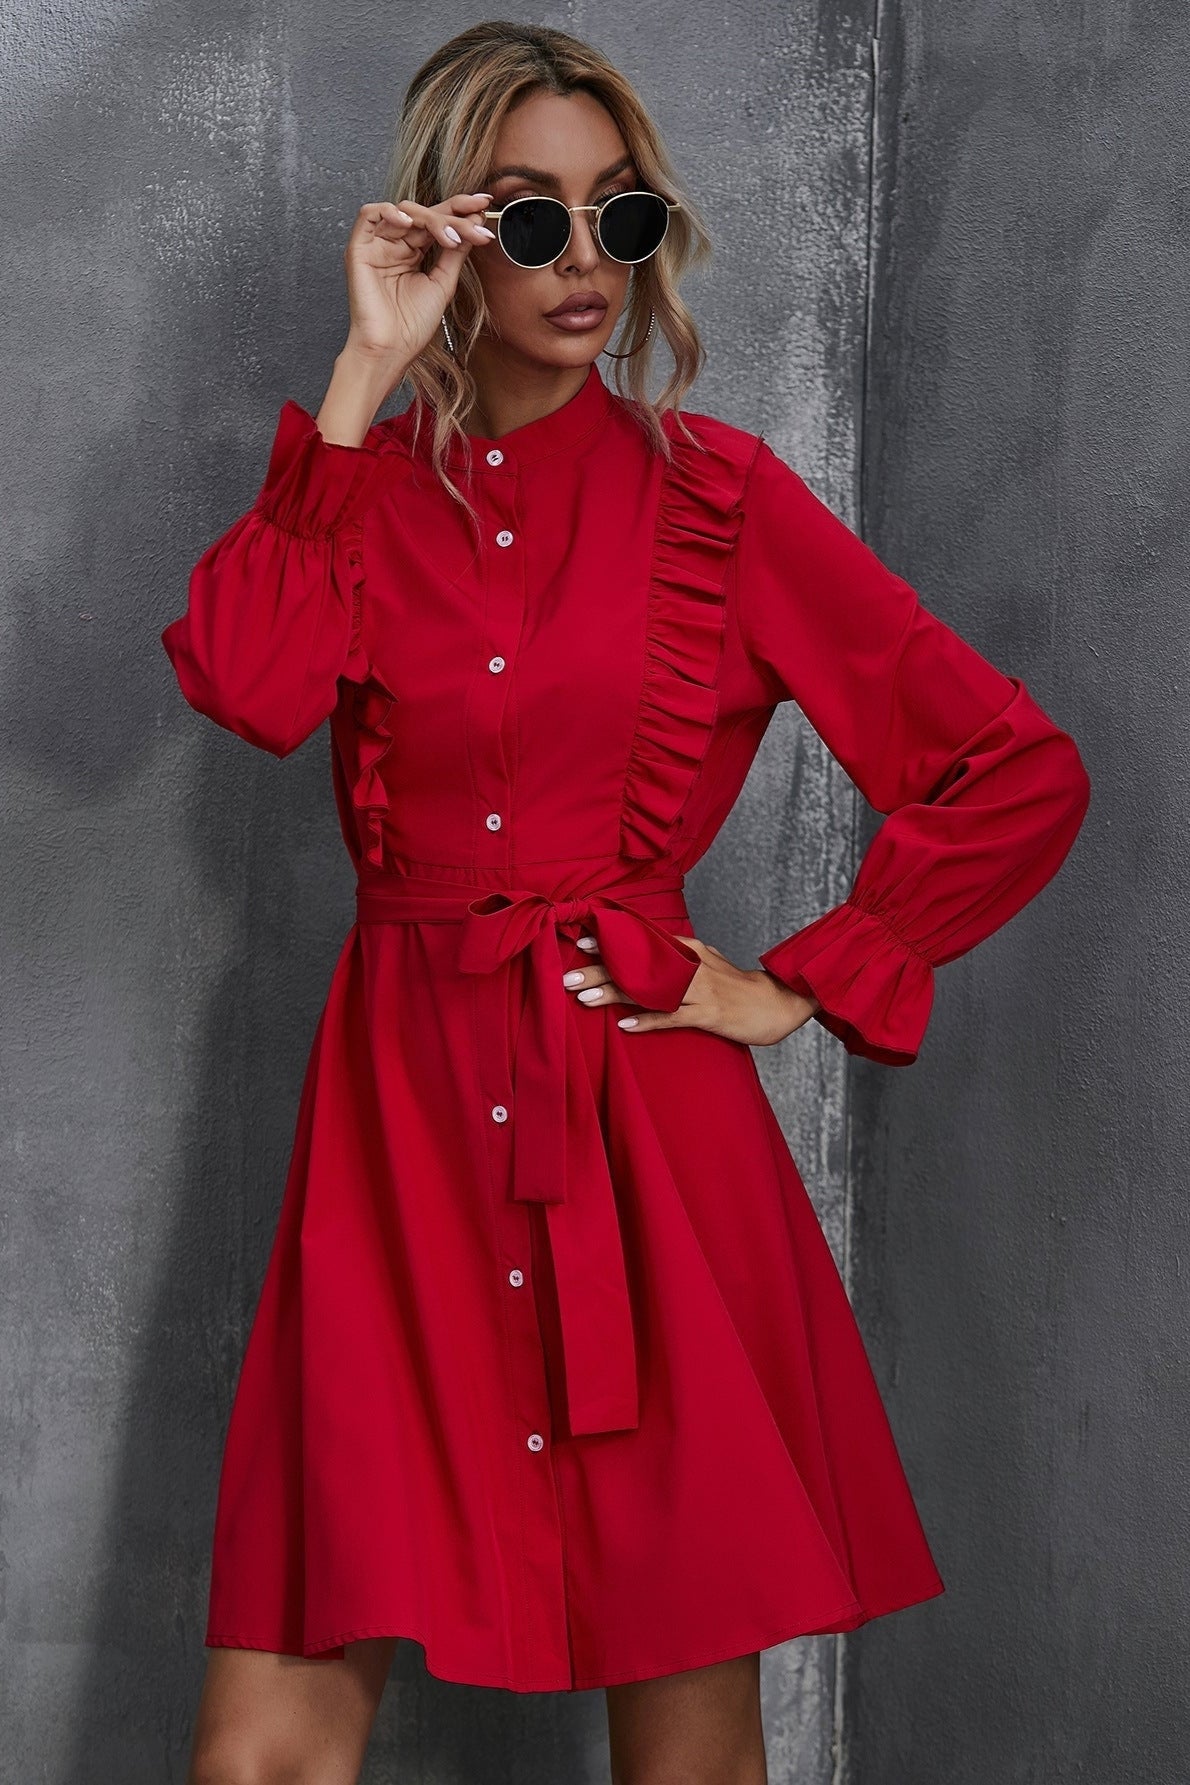 Red Ruffled Boho Dress Lace